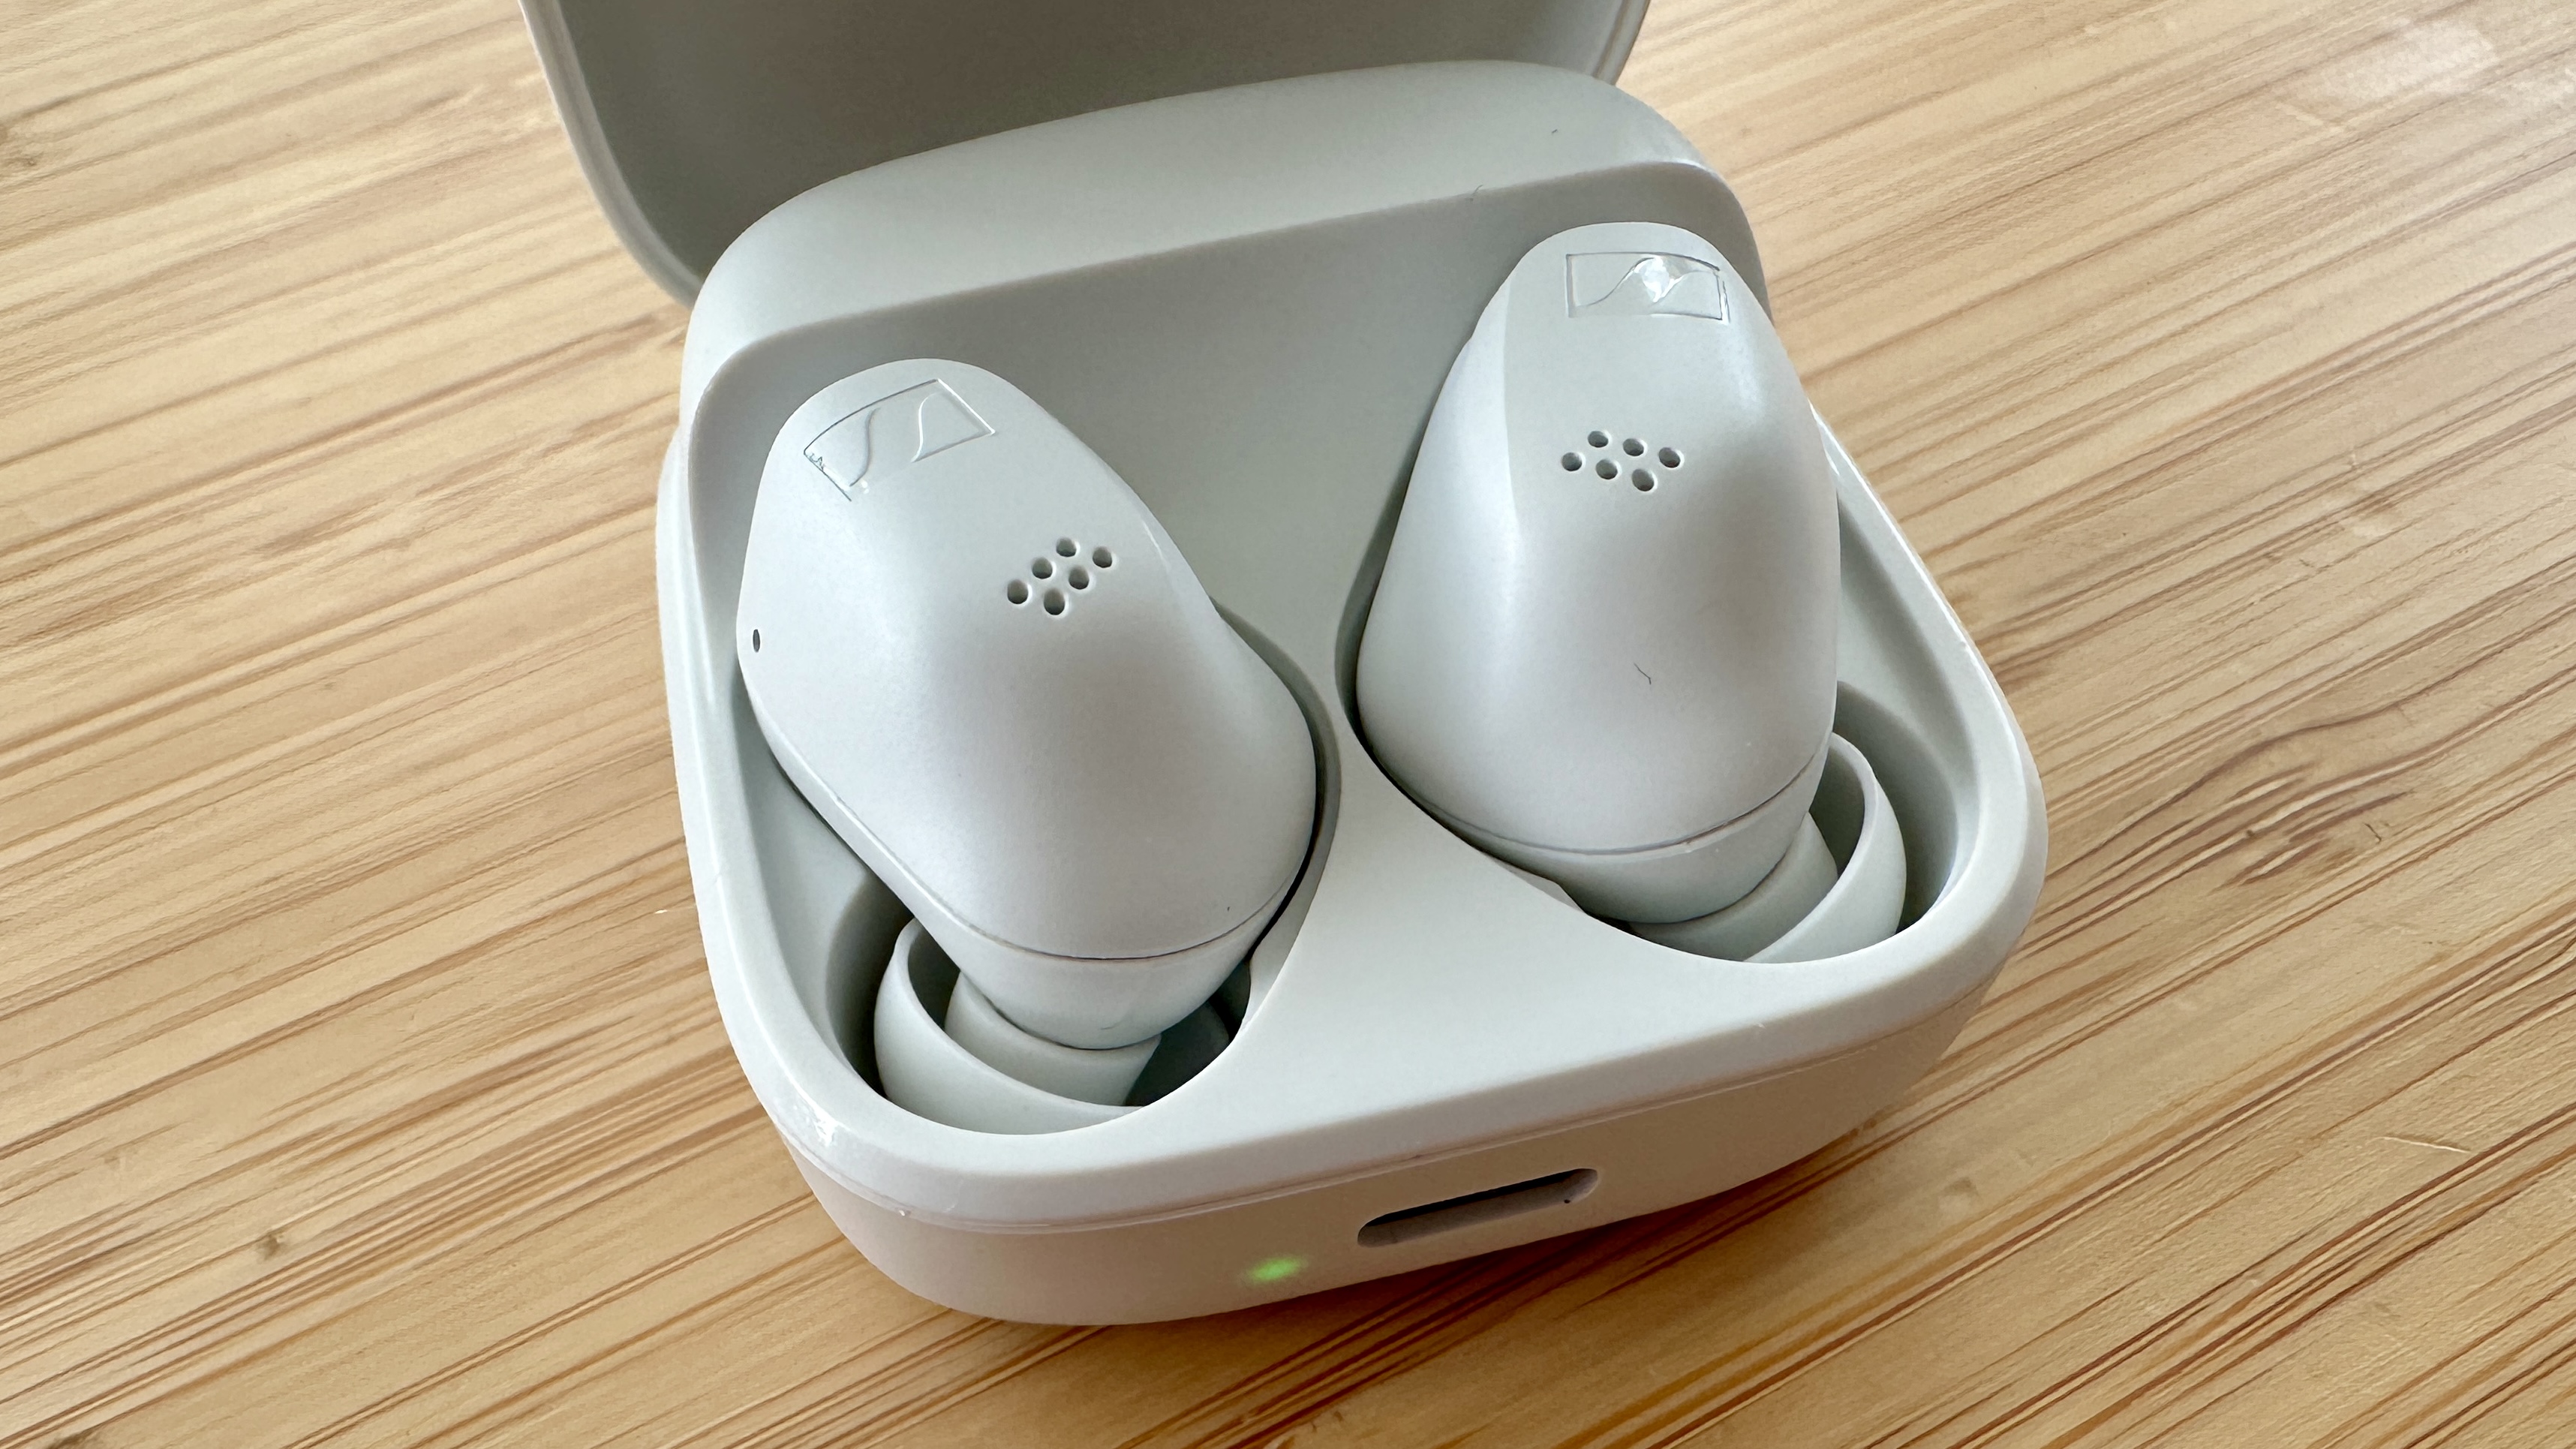 Sennheiser Accentum True Wireless earbuds review: big on features, light on sound